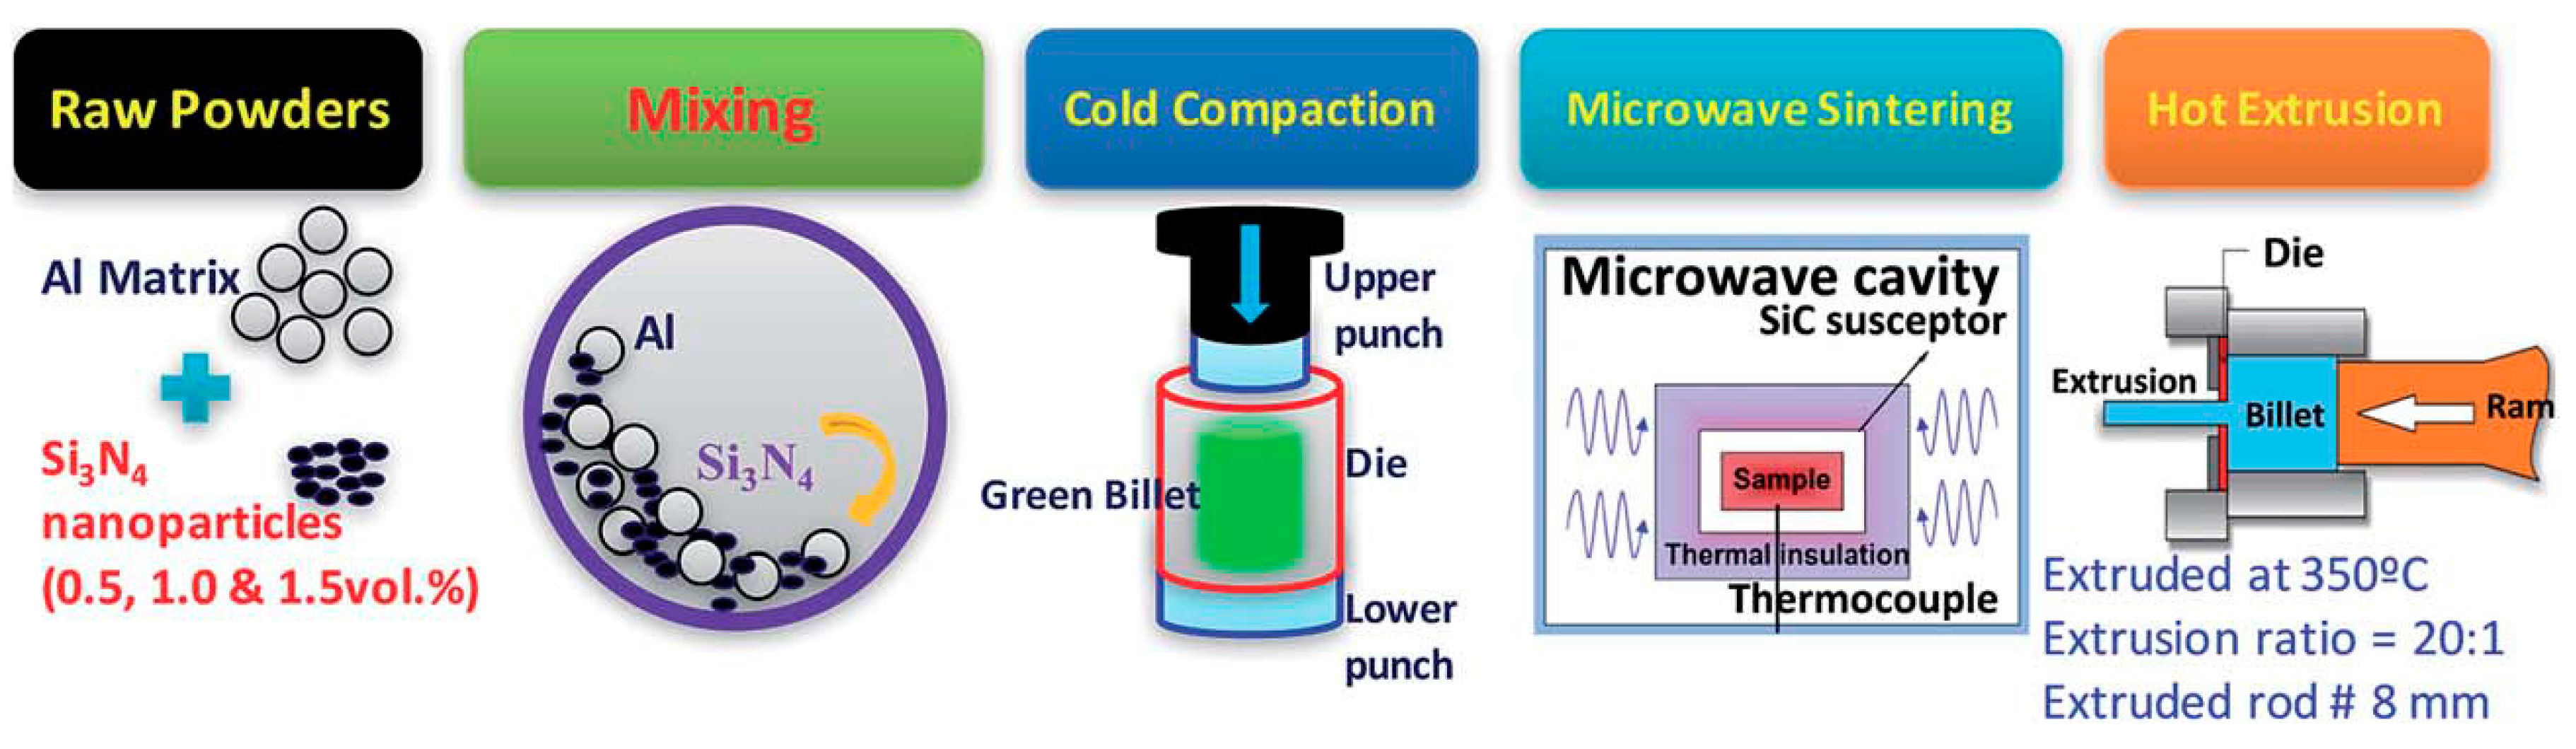 Cold mixing. Microwave cavity. Текстильных шлемов с предустановленными AG/AGCL Sintered электродами MCSCAP-T. Silver nanocomposites application. Catasiz Gold nanocomposites.